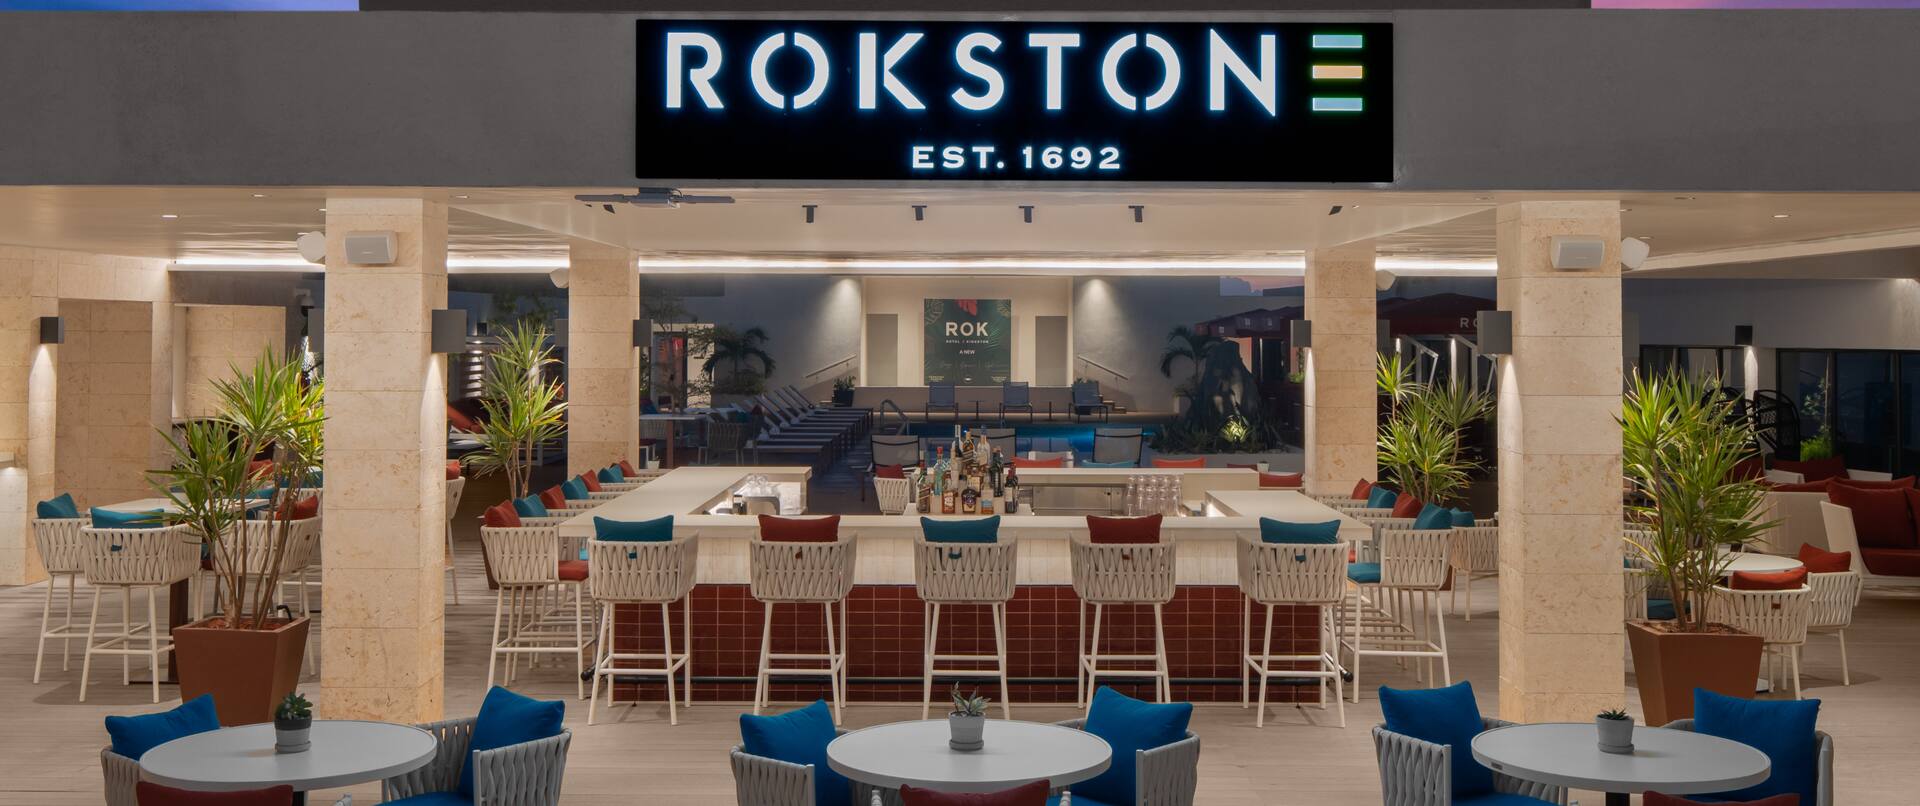 Rokstone Bar & Restaurant